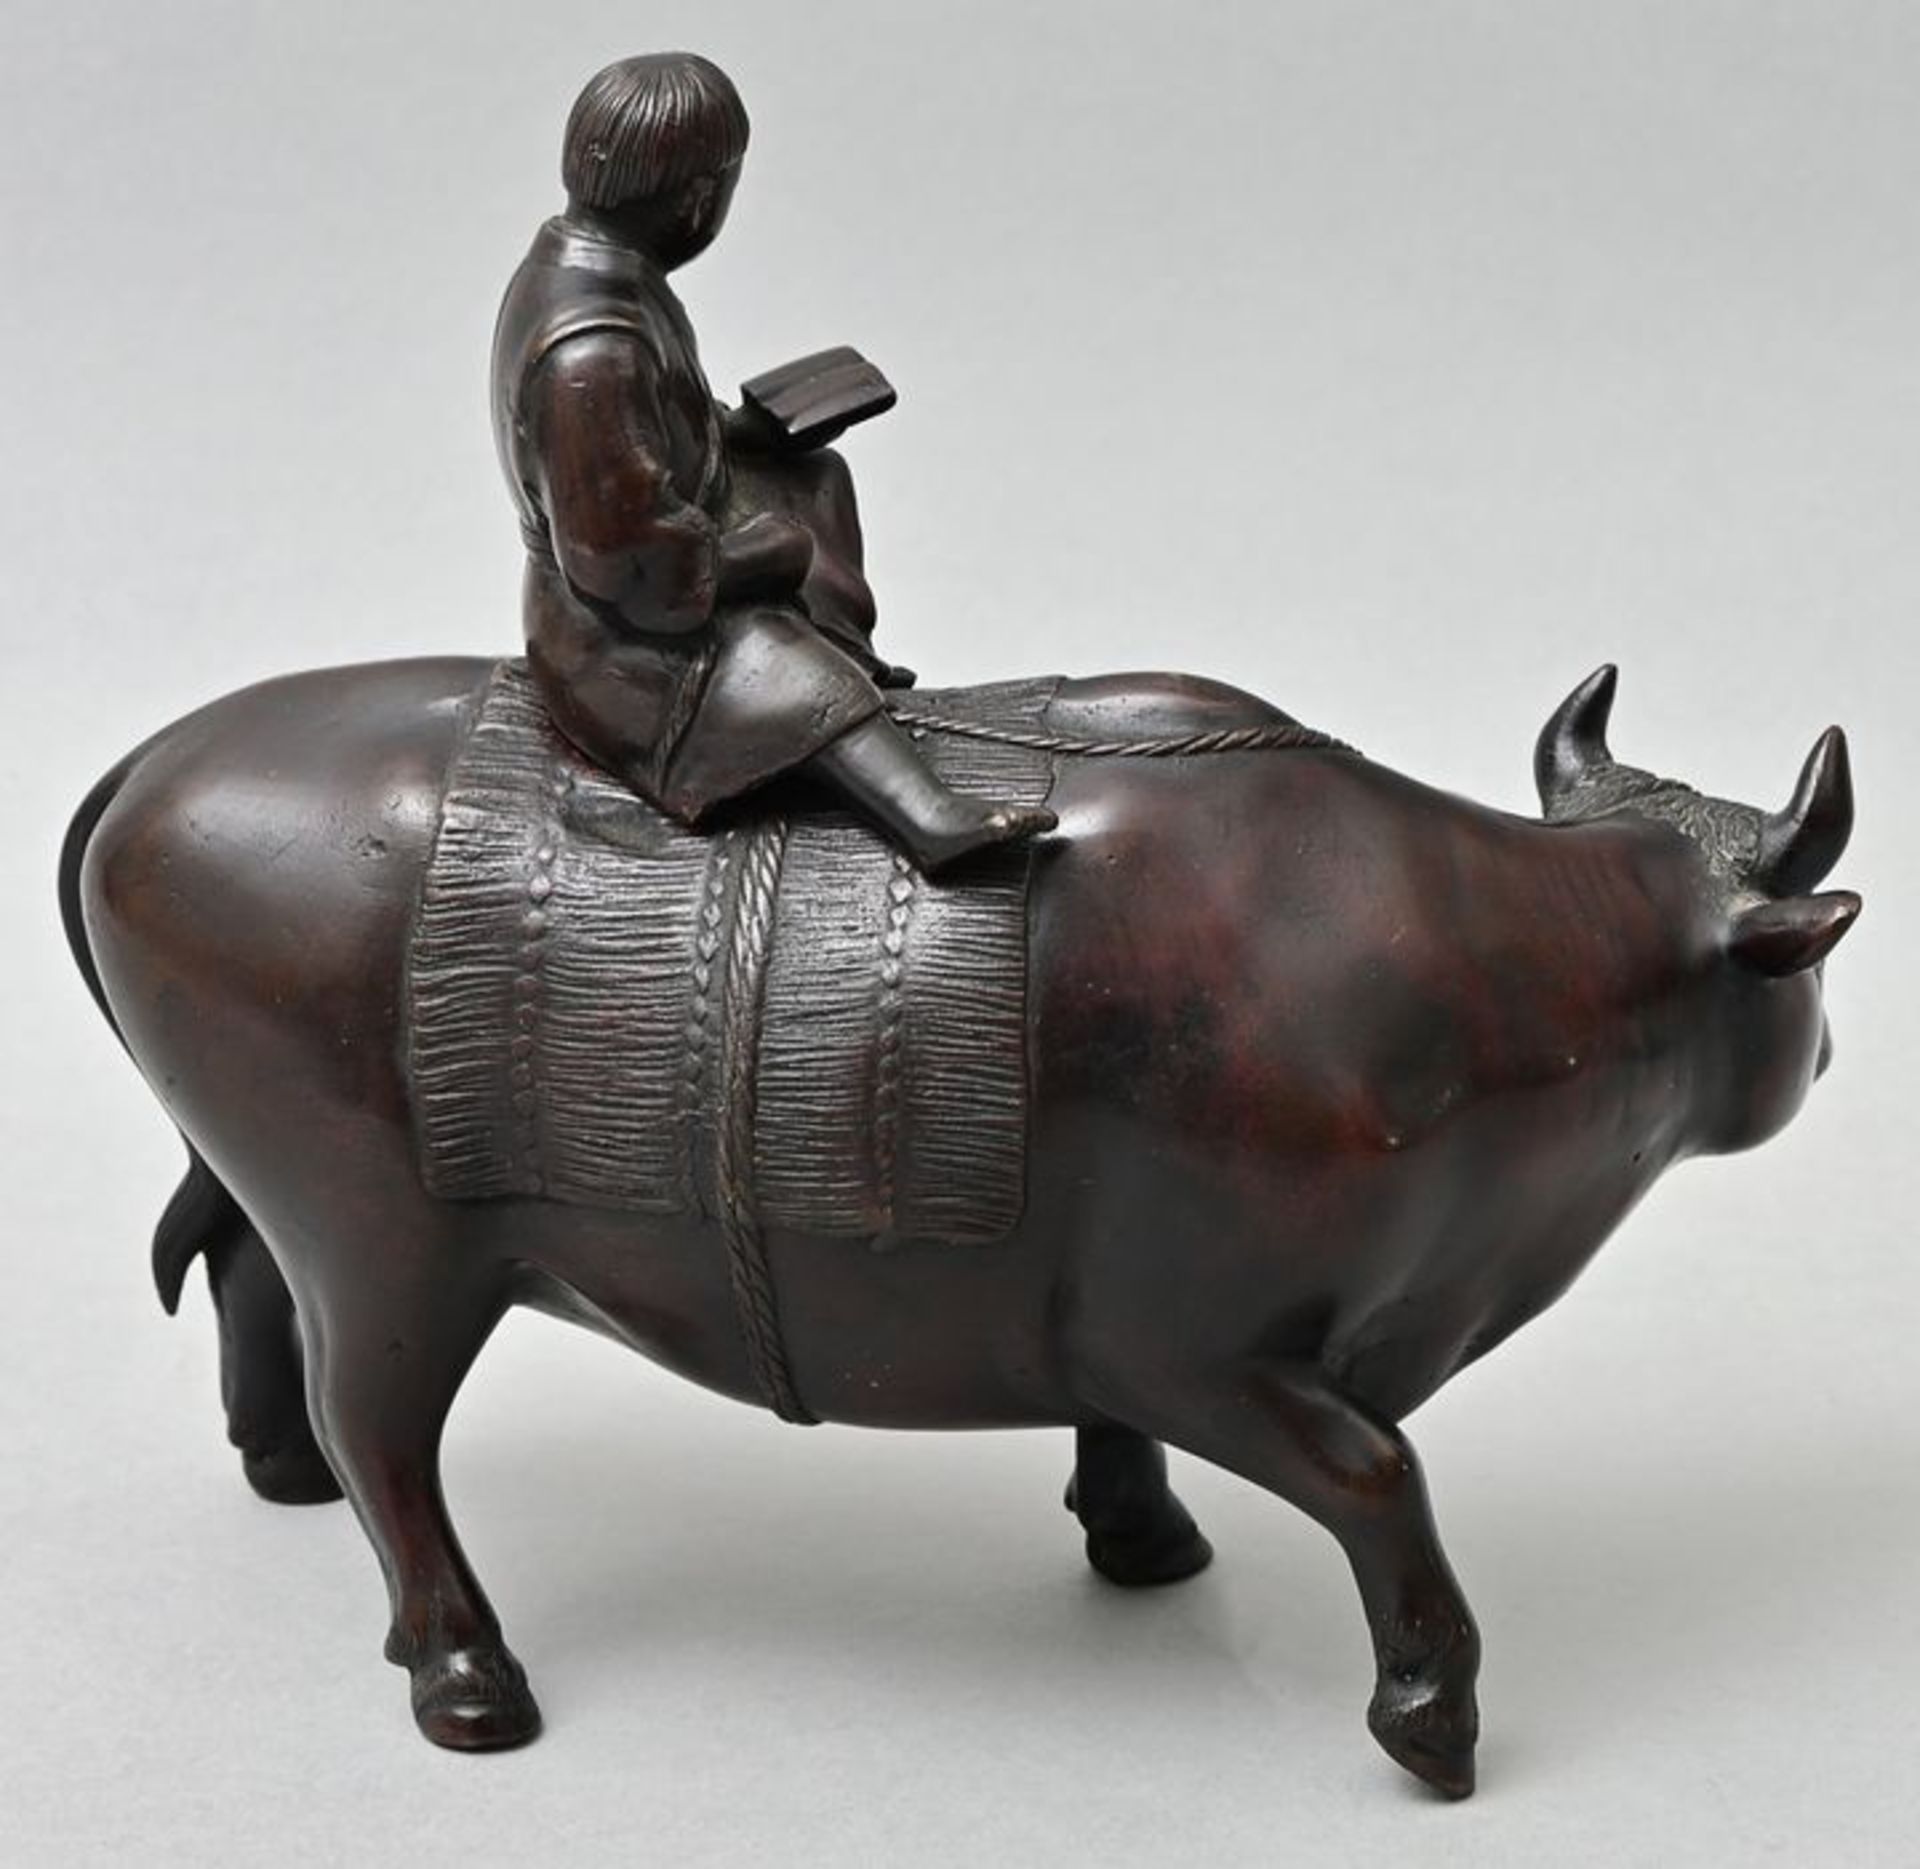 Junge auf Wasserbüffel/ boy riding on a water buffalo - Bild 2 aus 5